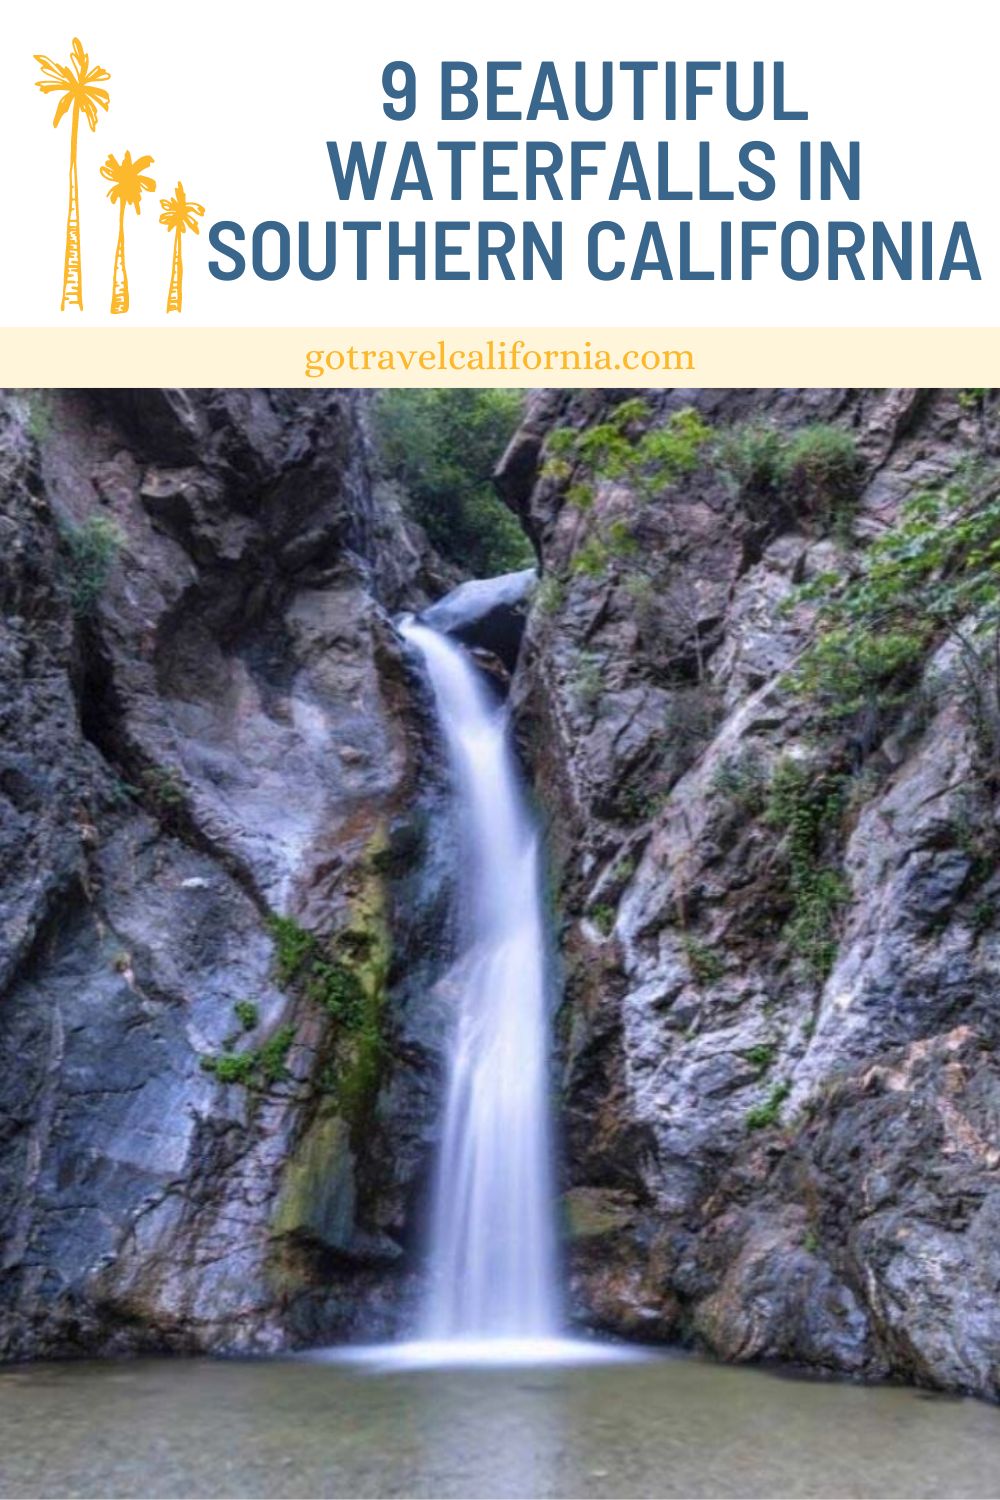 Southern California waterfall